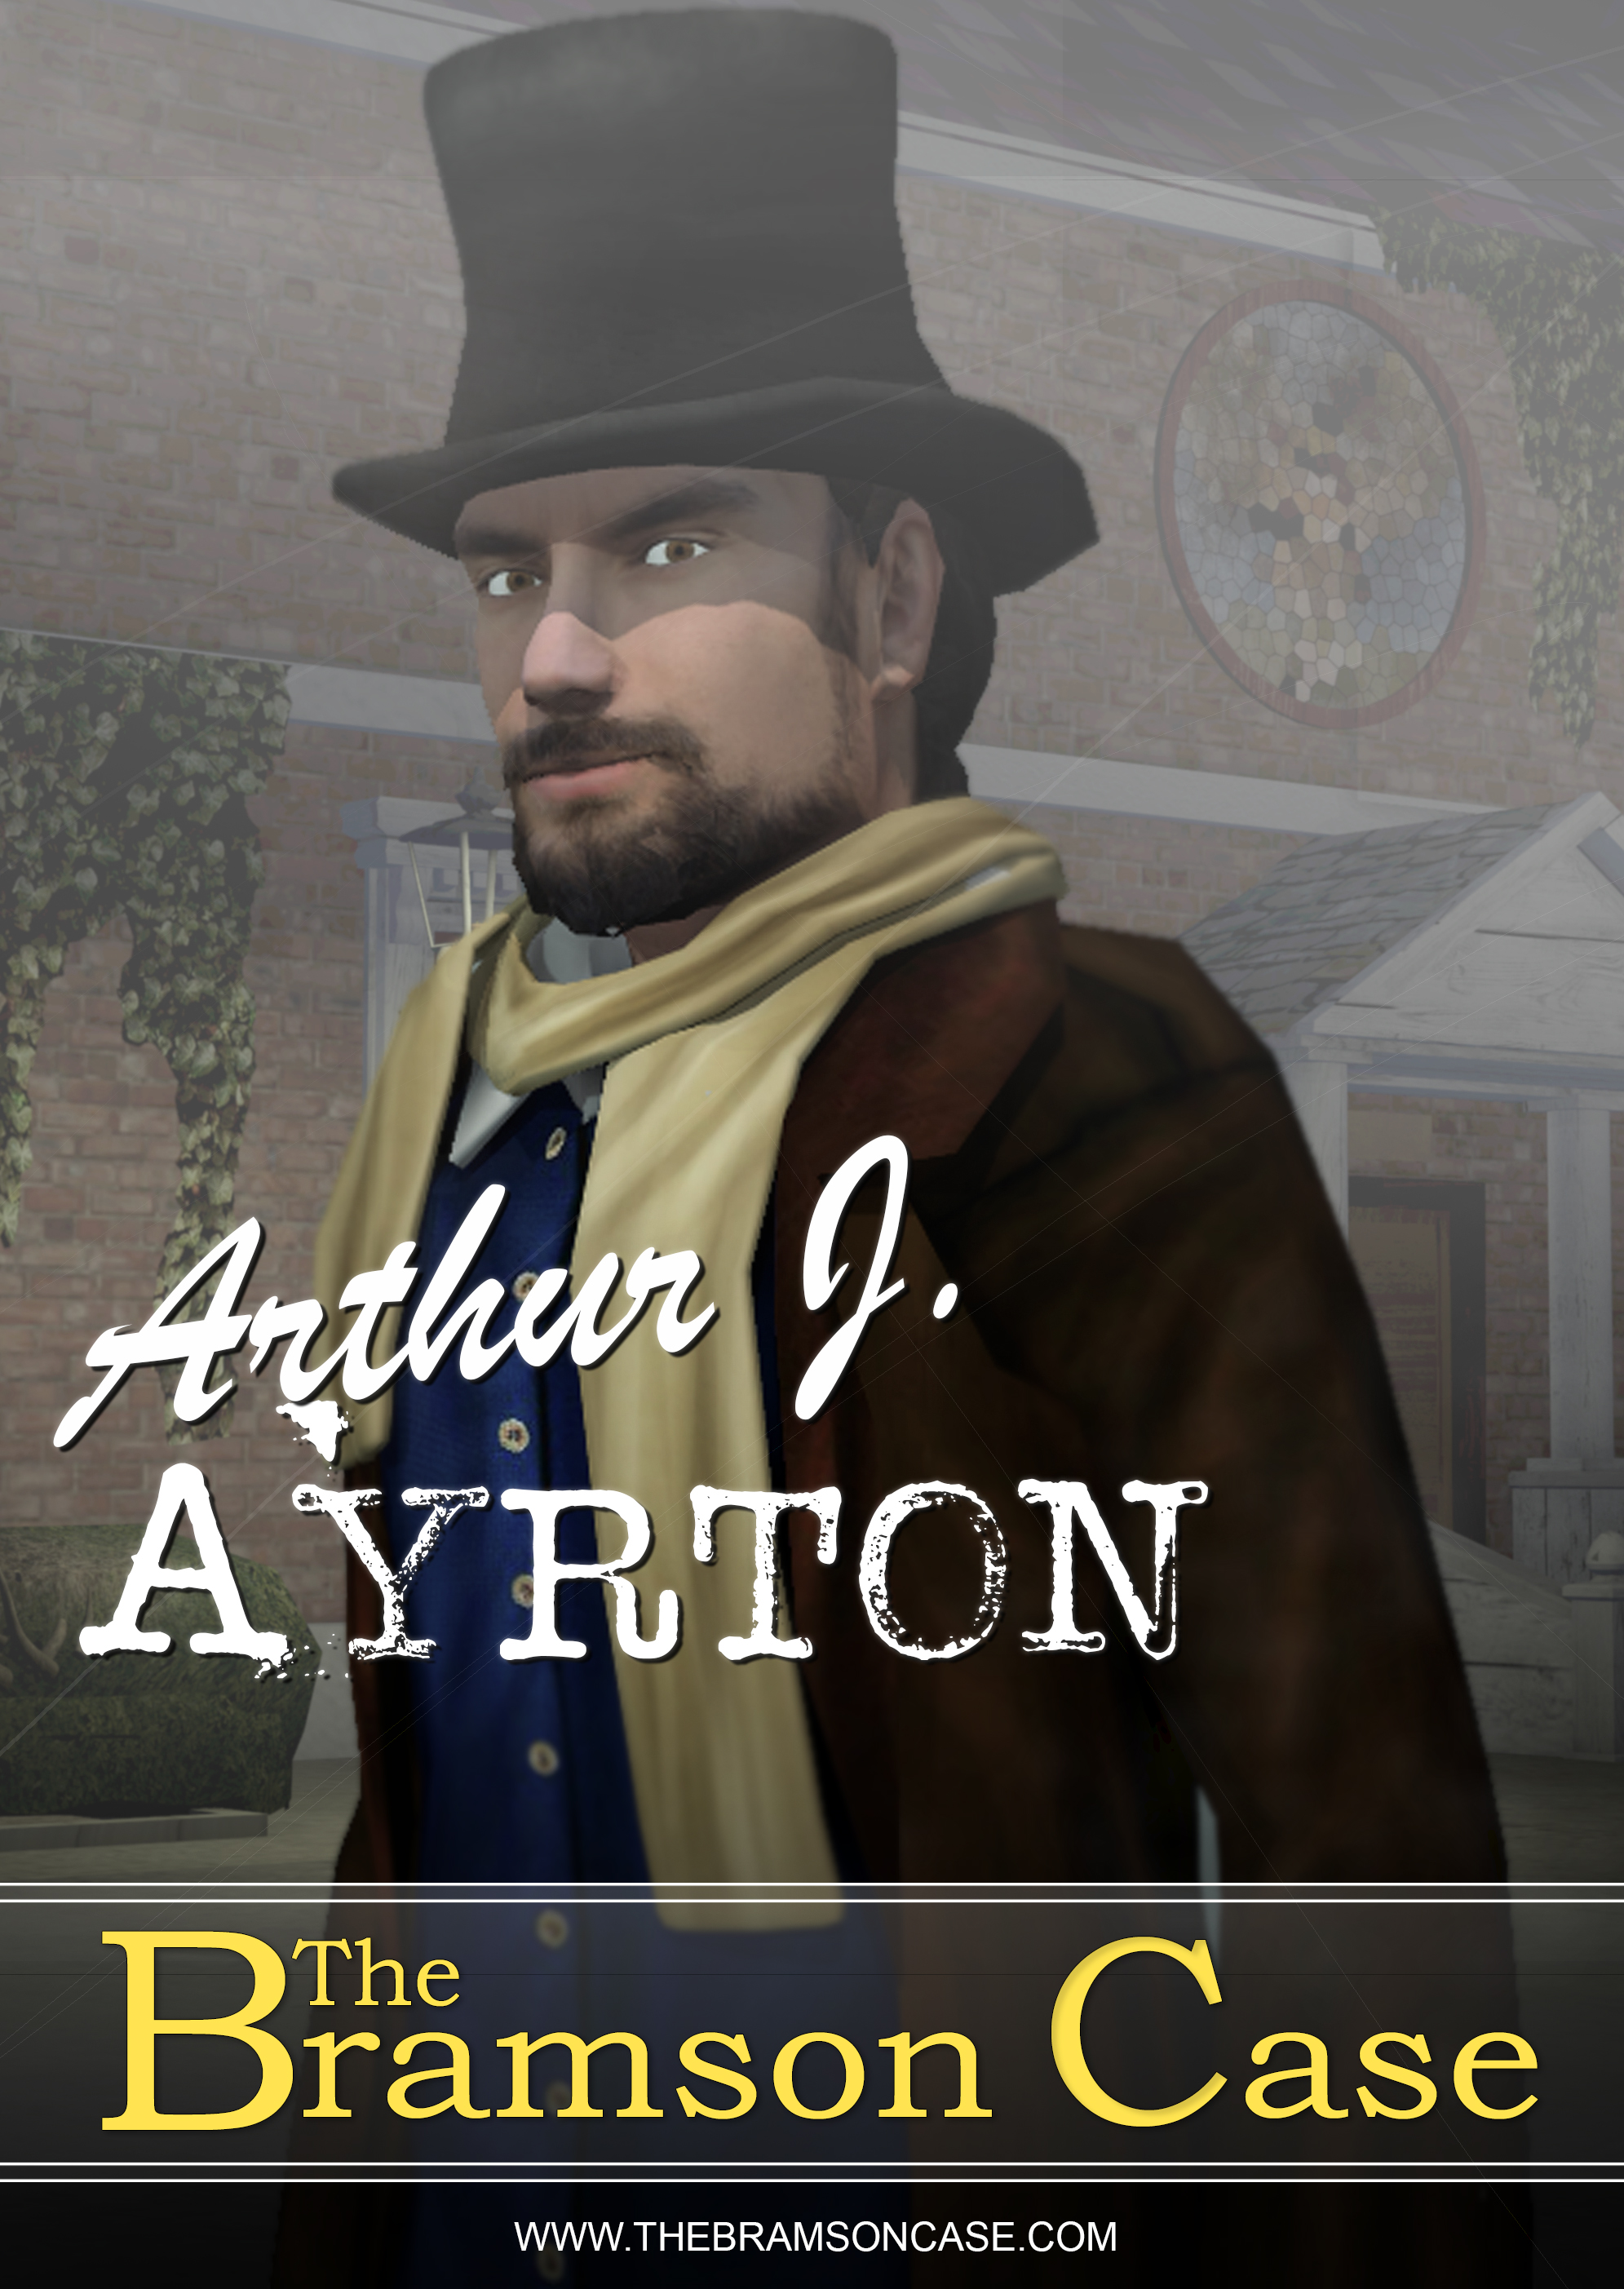 the bramson case, characters, cthulhu,lovecraft, Arthur J. Ayrton Ayrton